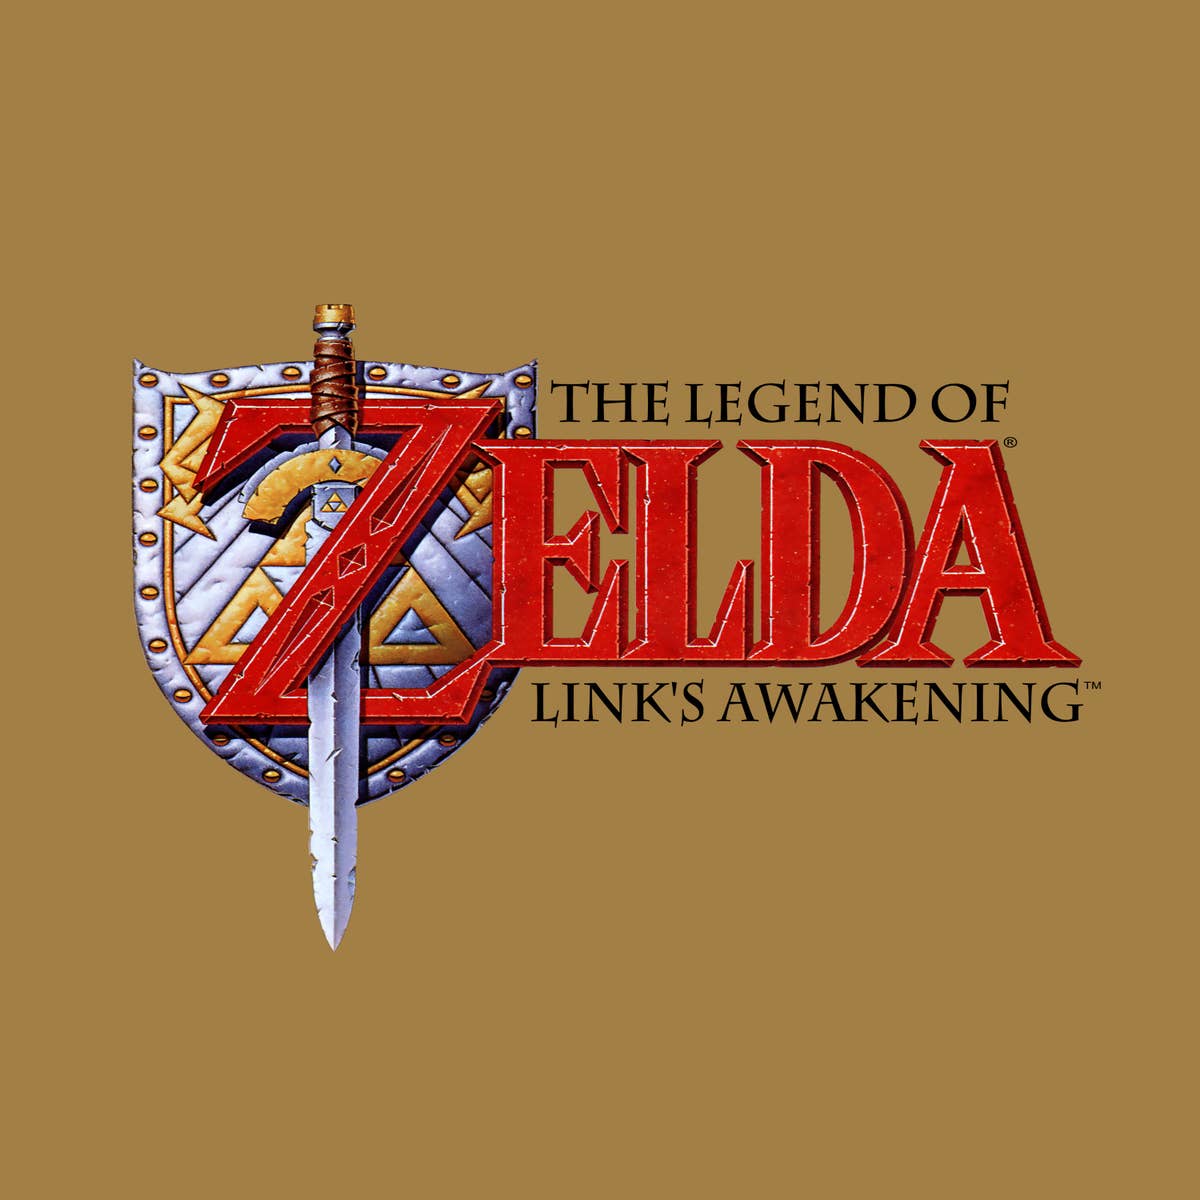 The Legend of Zelda: Link's Awakening DX walkthrough video guide